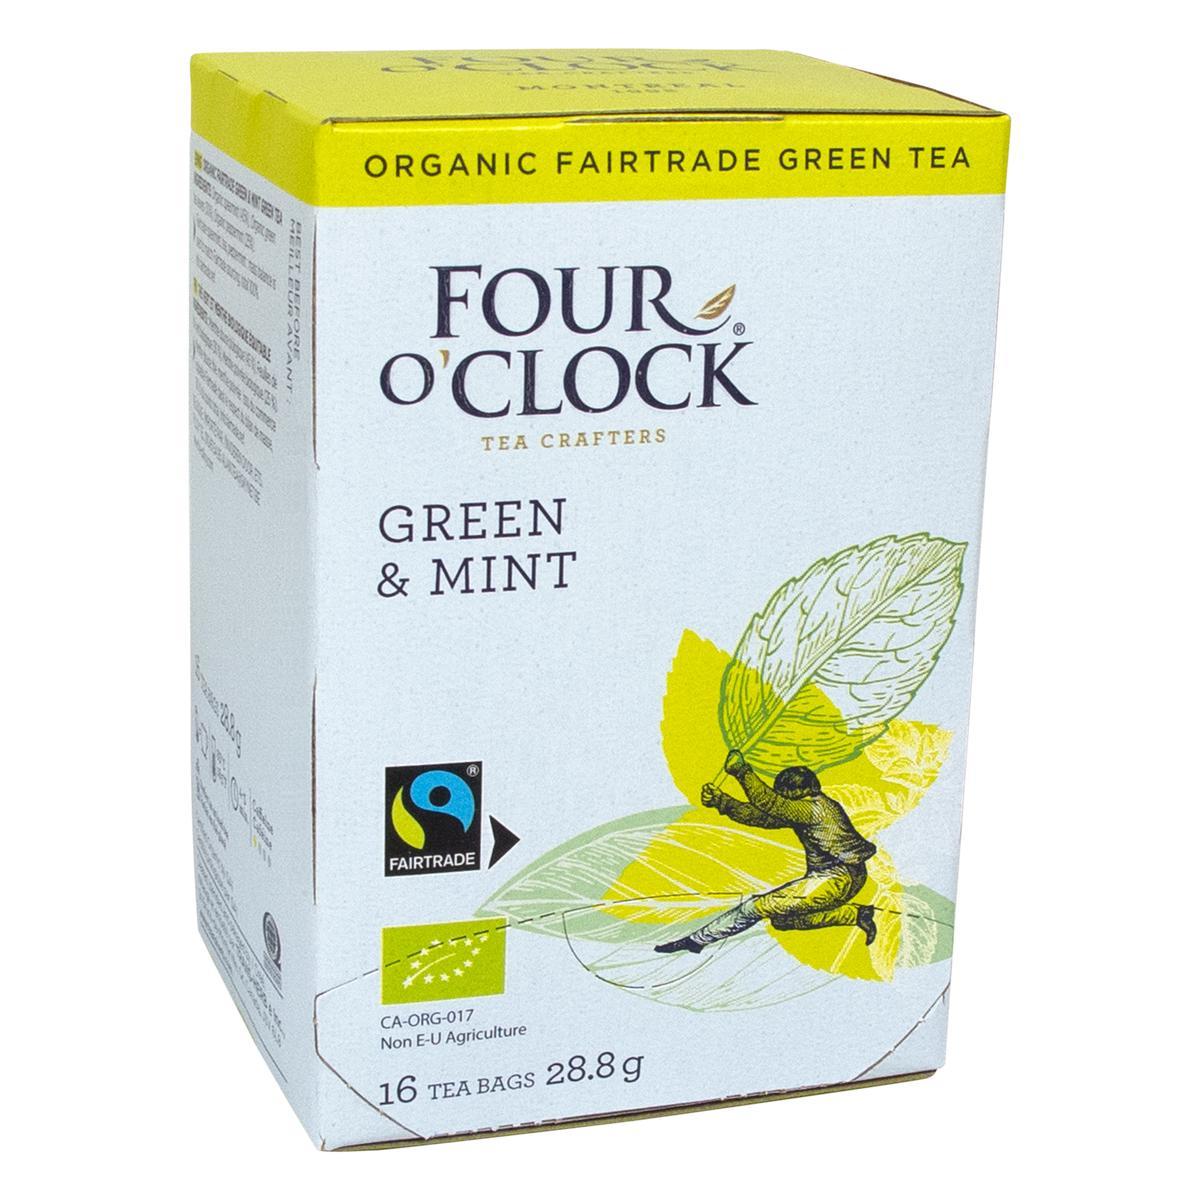 Four O’Clock's Four O'Clock GREEN & MINT '